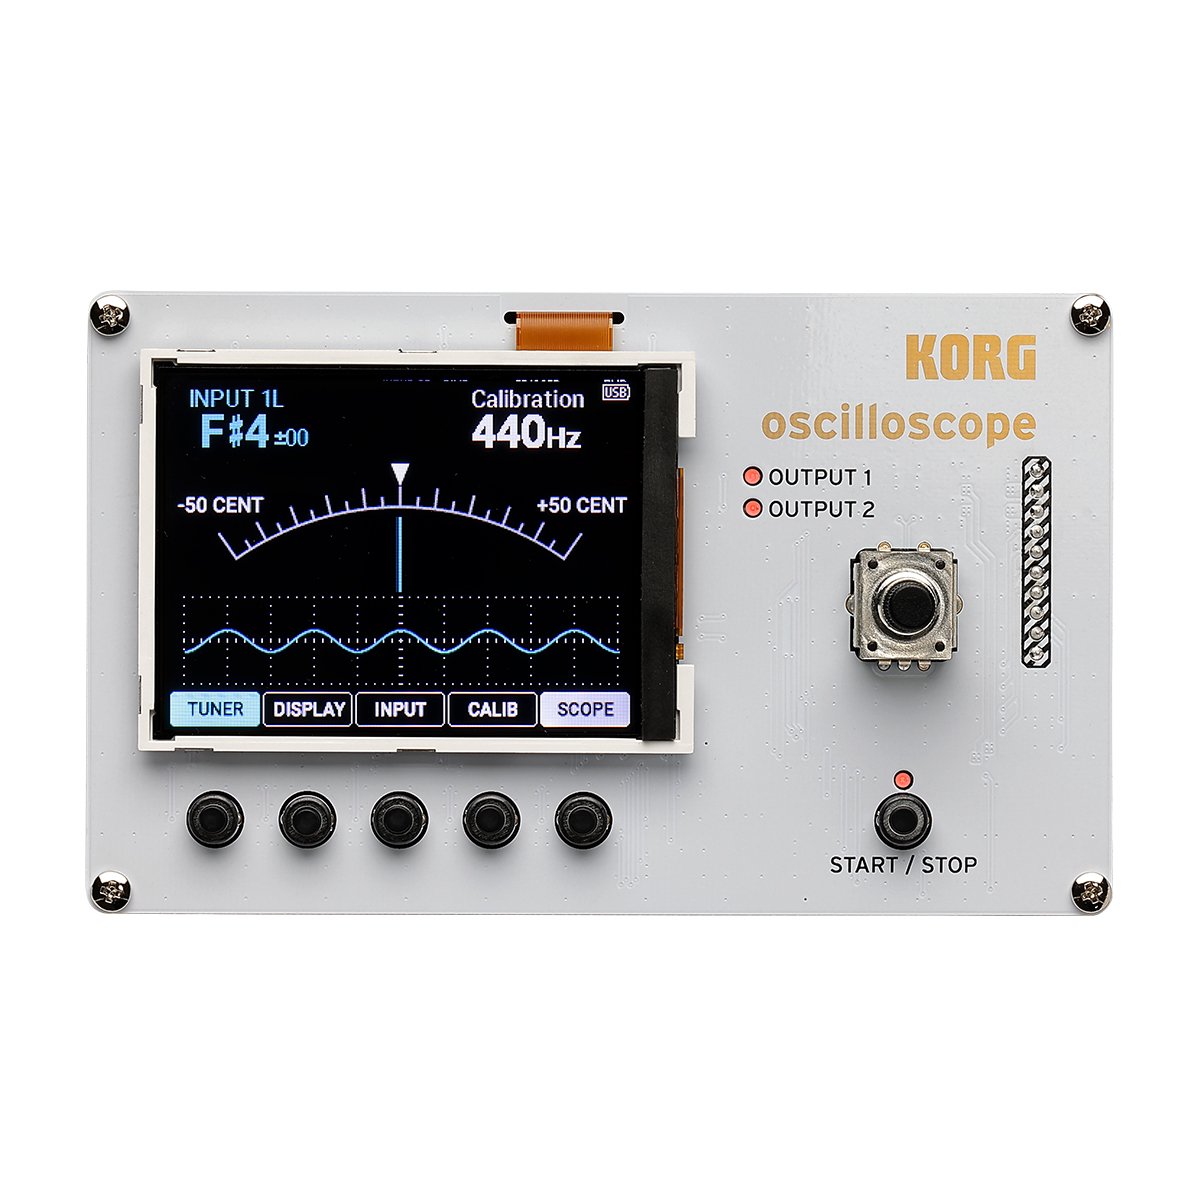 KORG NTS-2 oscilloscopeユーロラック